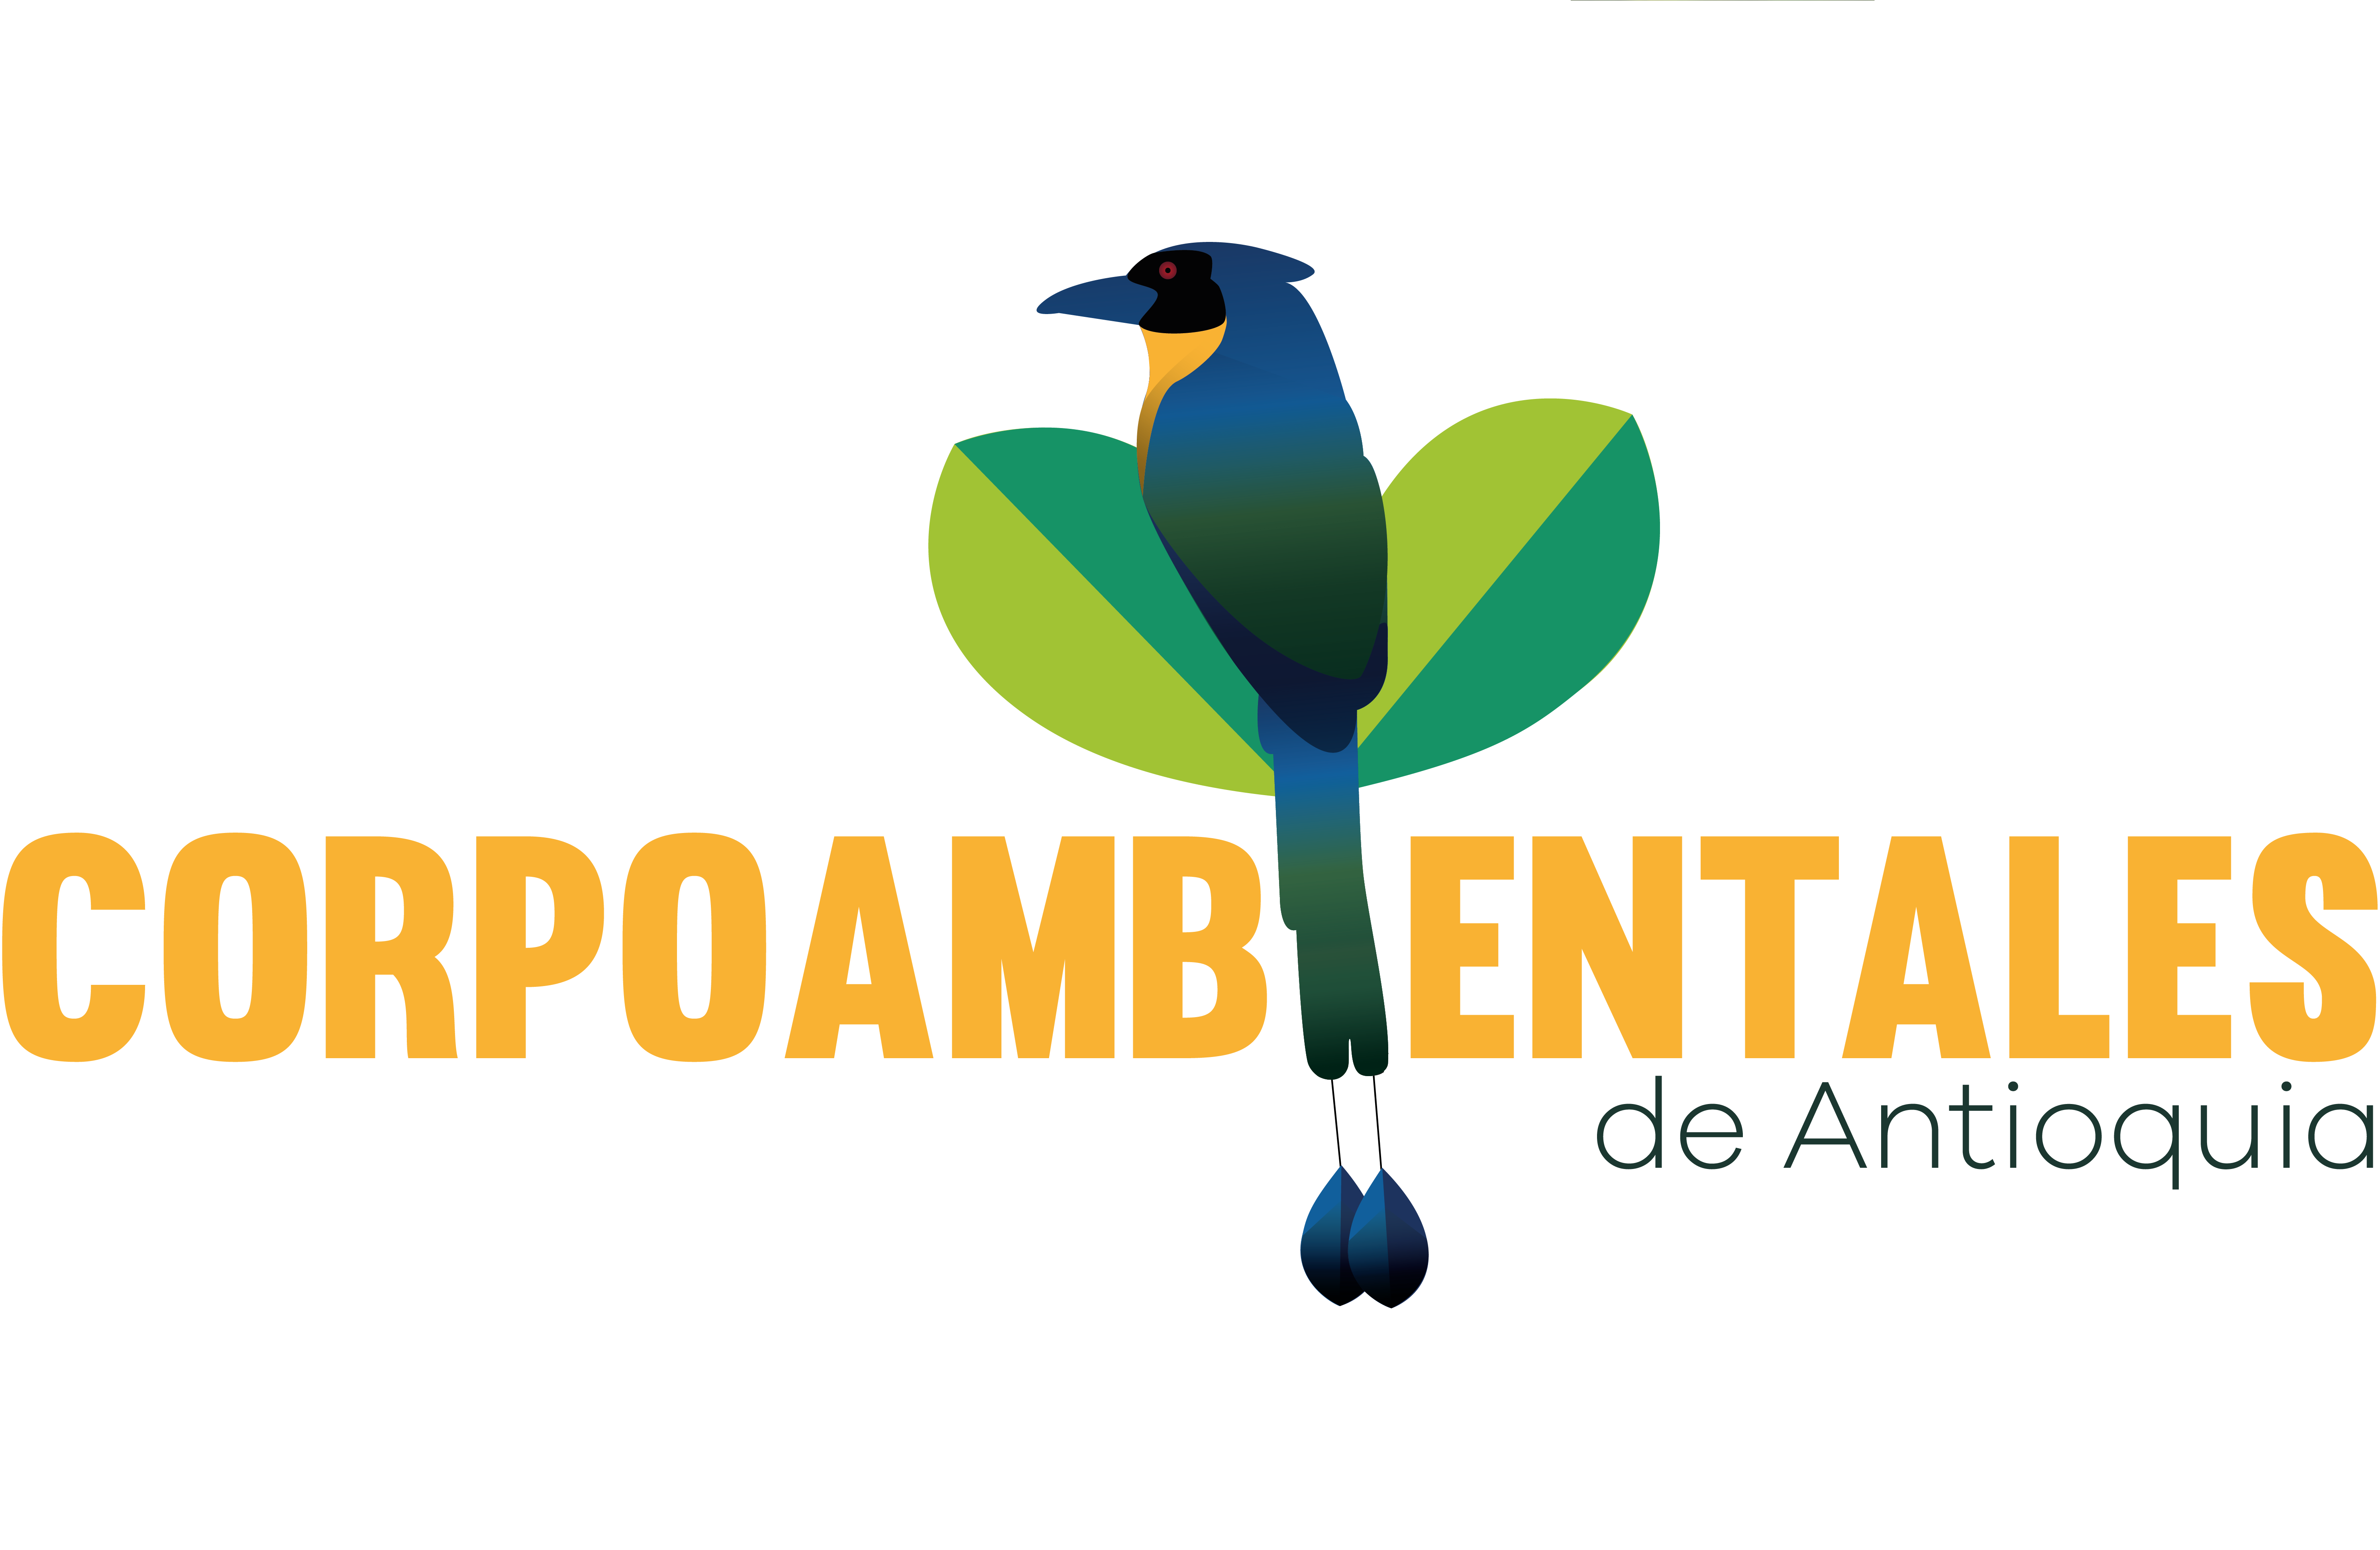 Corpoambientales de Antioquia Logo